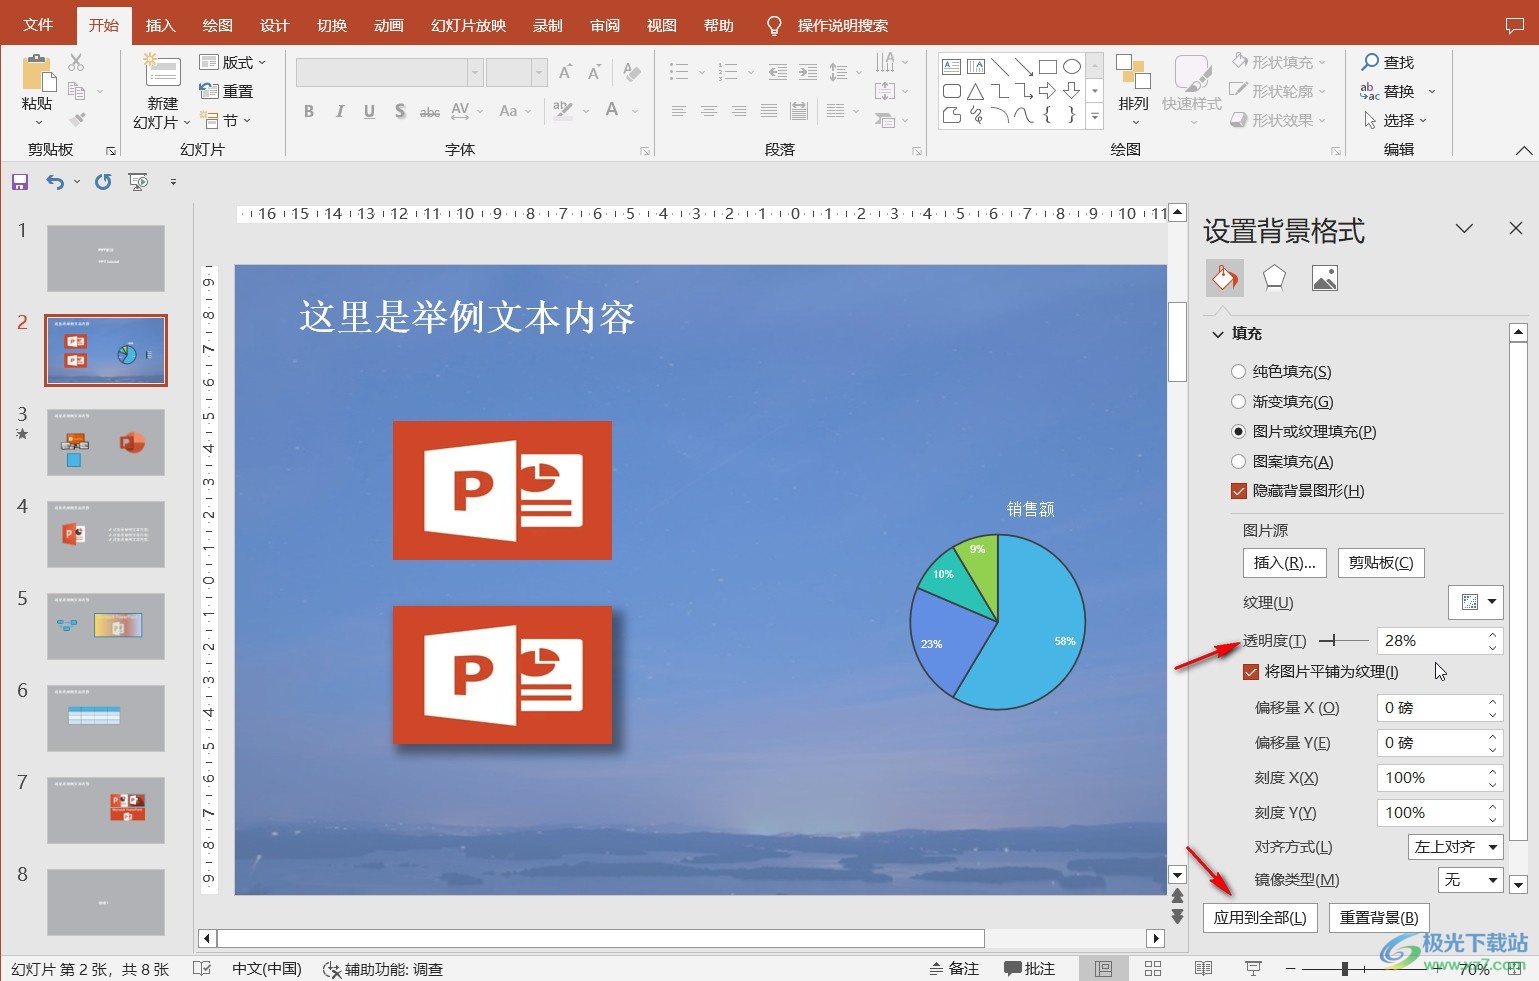 PPT怎么把图片嵌入图形-PowerPoint演示文稿把图片嵌入图形的方法教程 - 极光下载站